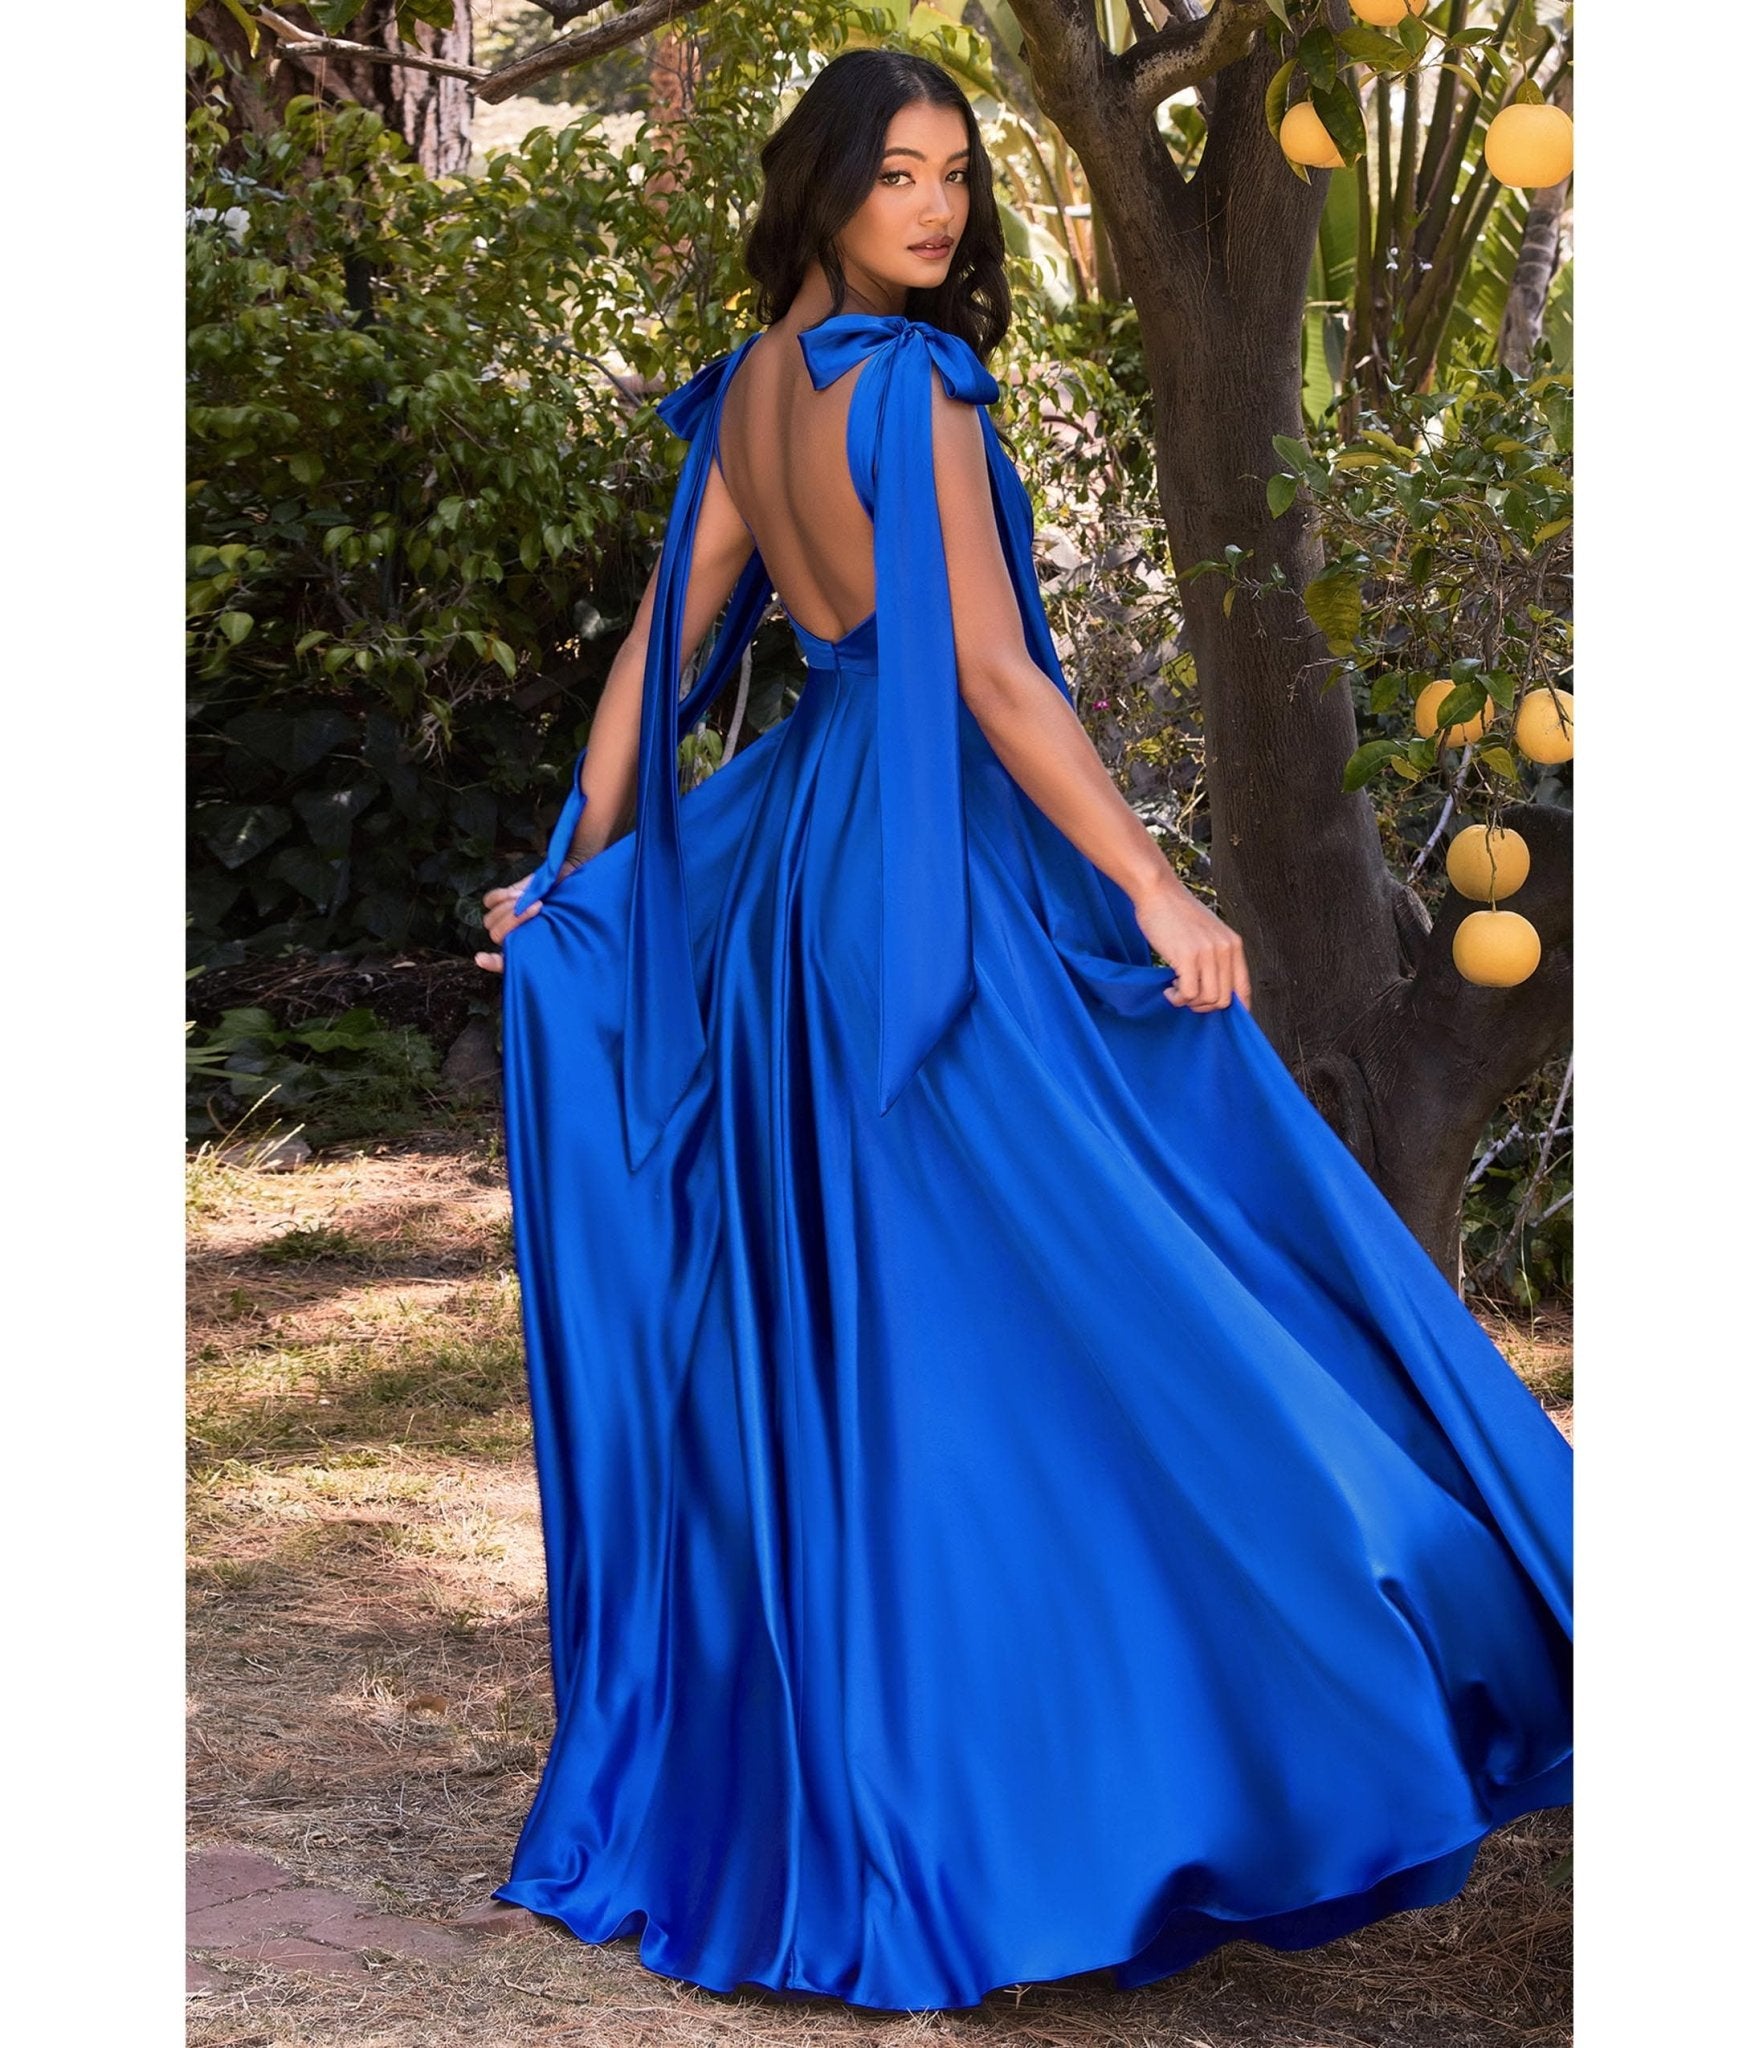 blue dresses for prom